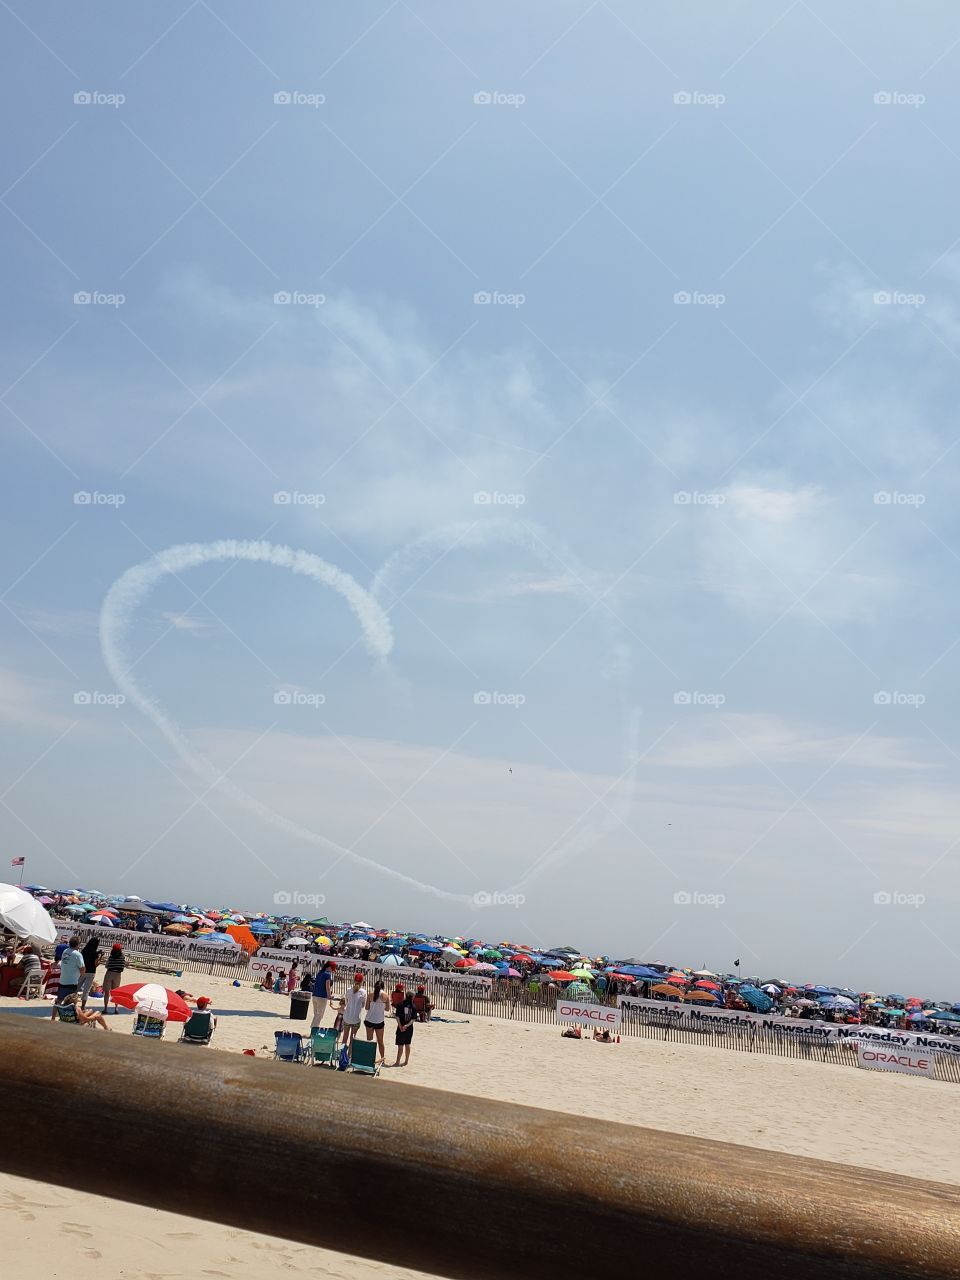 memorial day weekend airshow at jones beach,NY